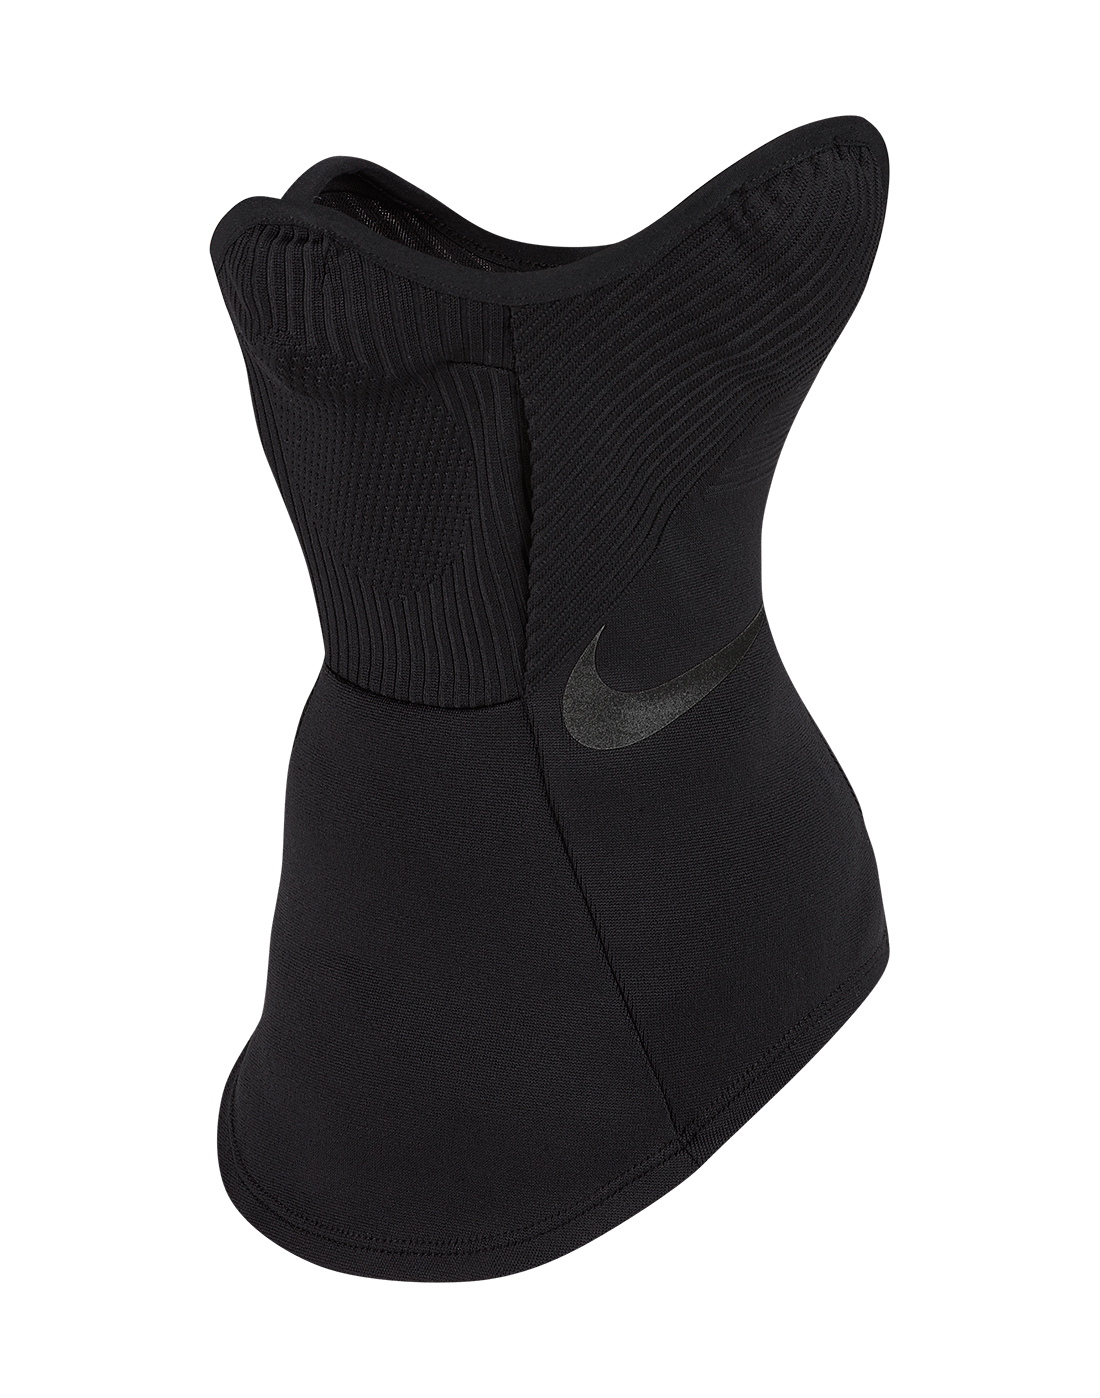 Nike Vaporknit Strike Snood - Black | Life Style Sports UK